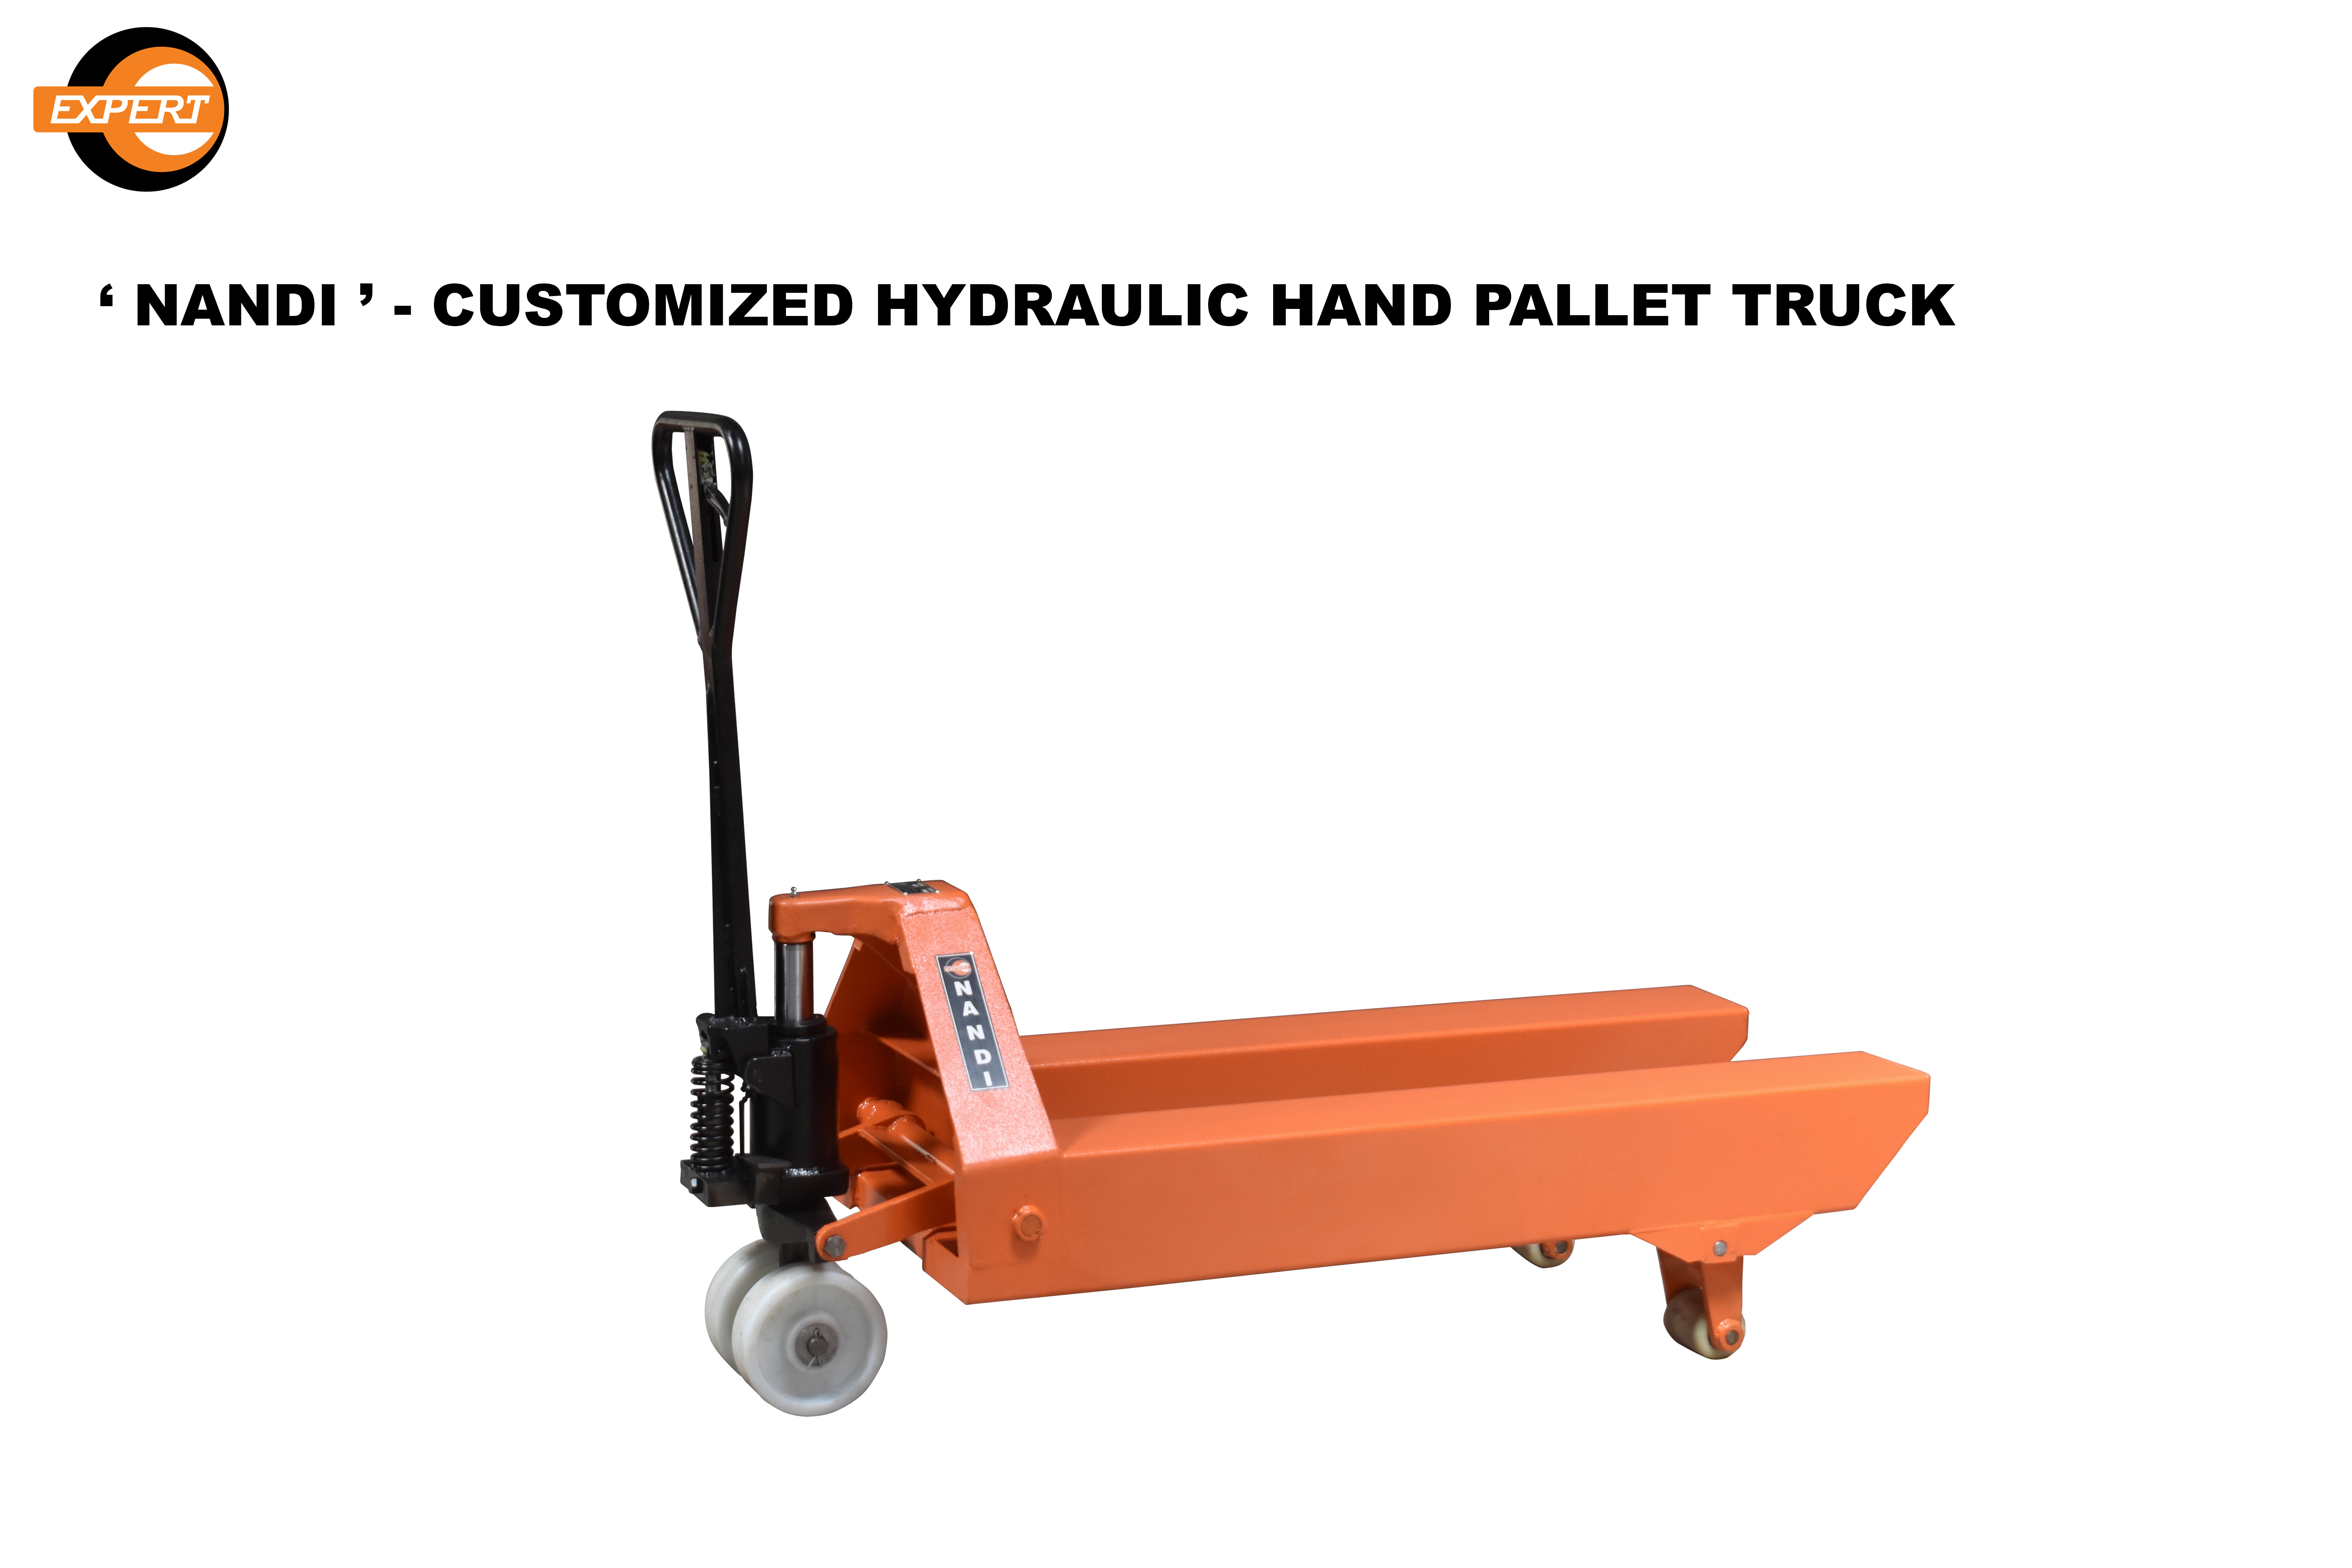 Nandi Hydraulic Hand Pallet Truck